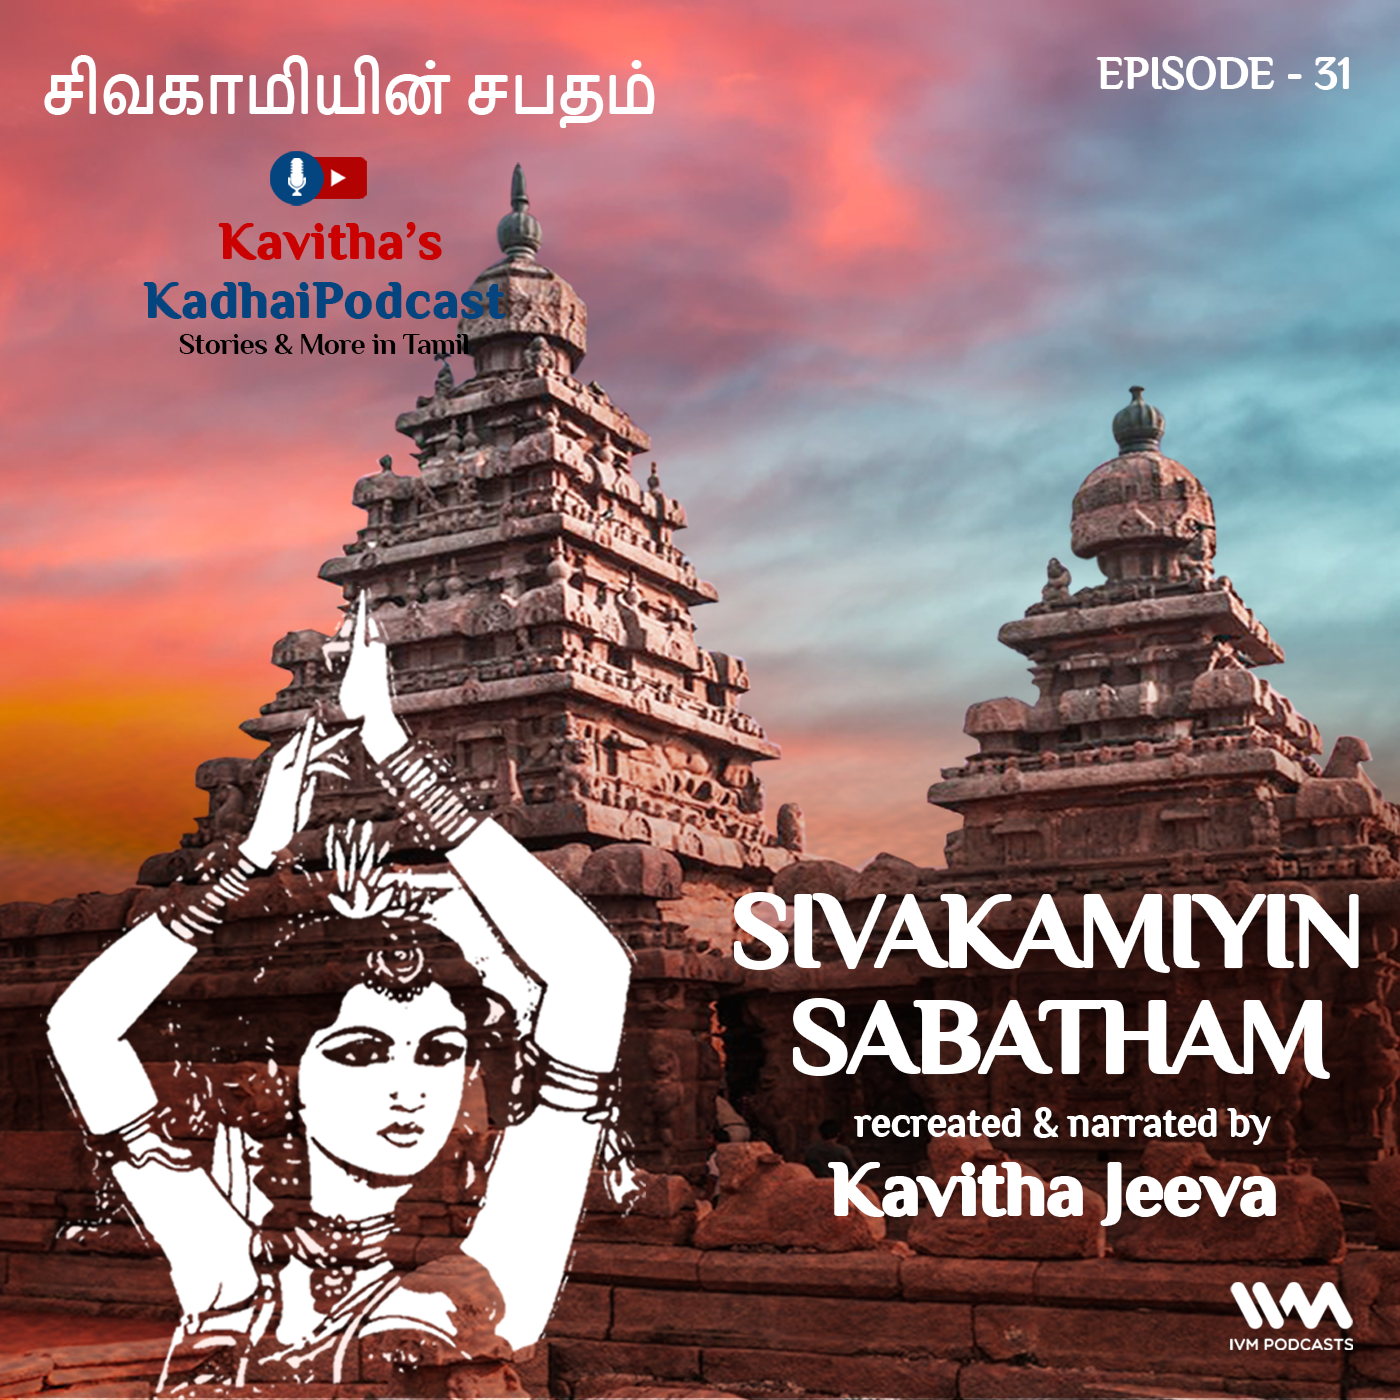 KadhaiPodcast's Sivakamiyin Sabatham - Episode # 31